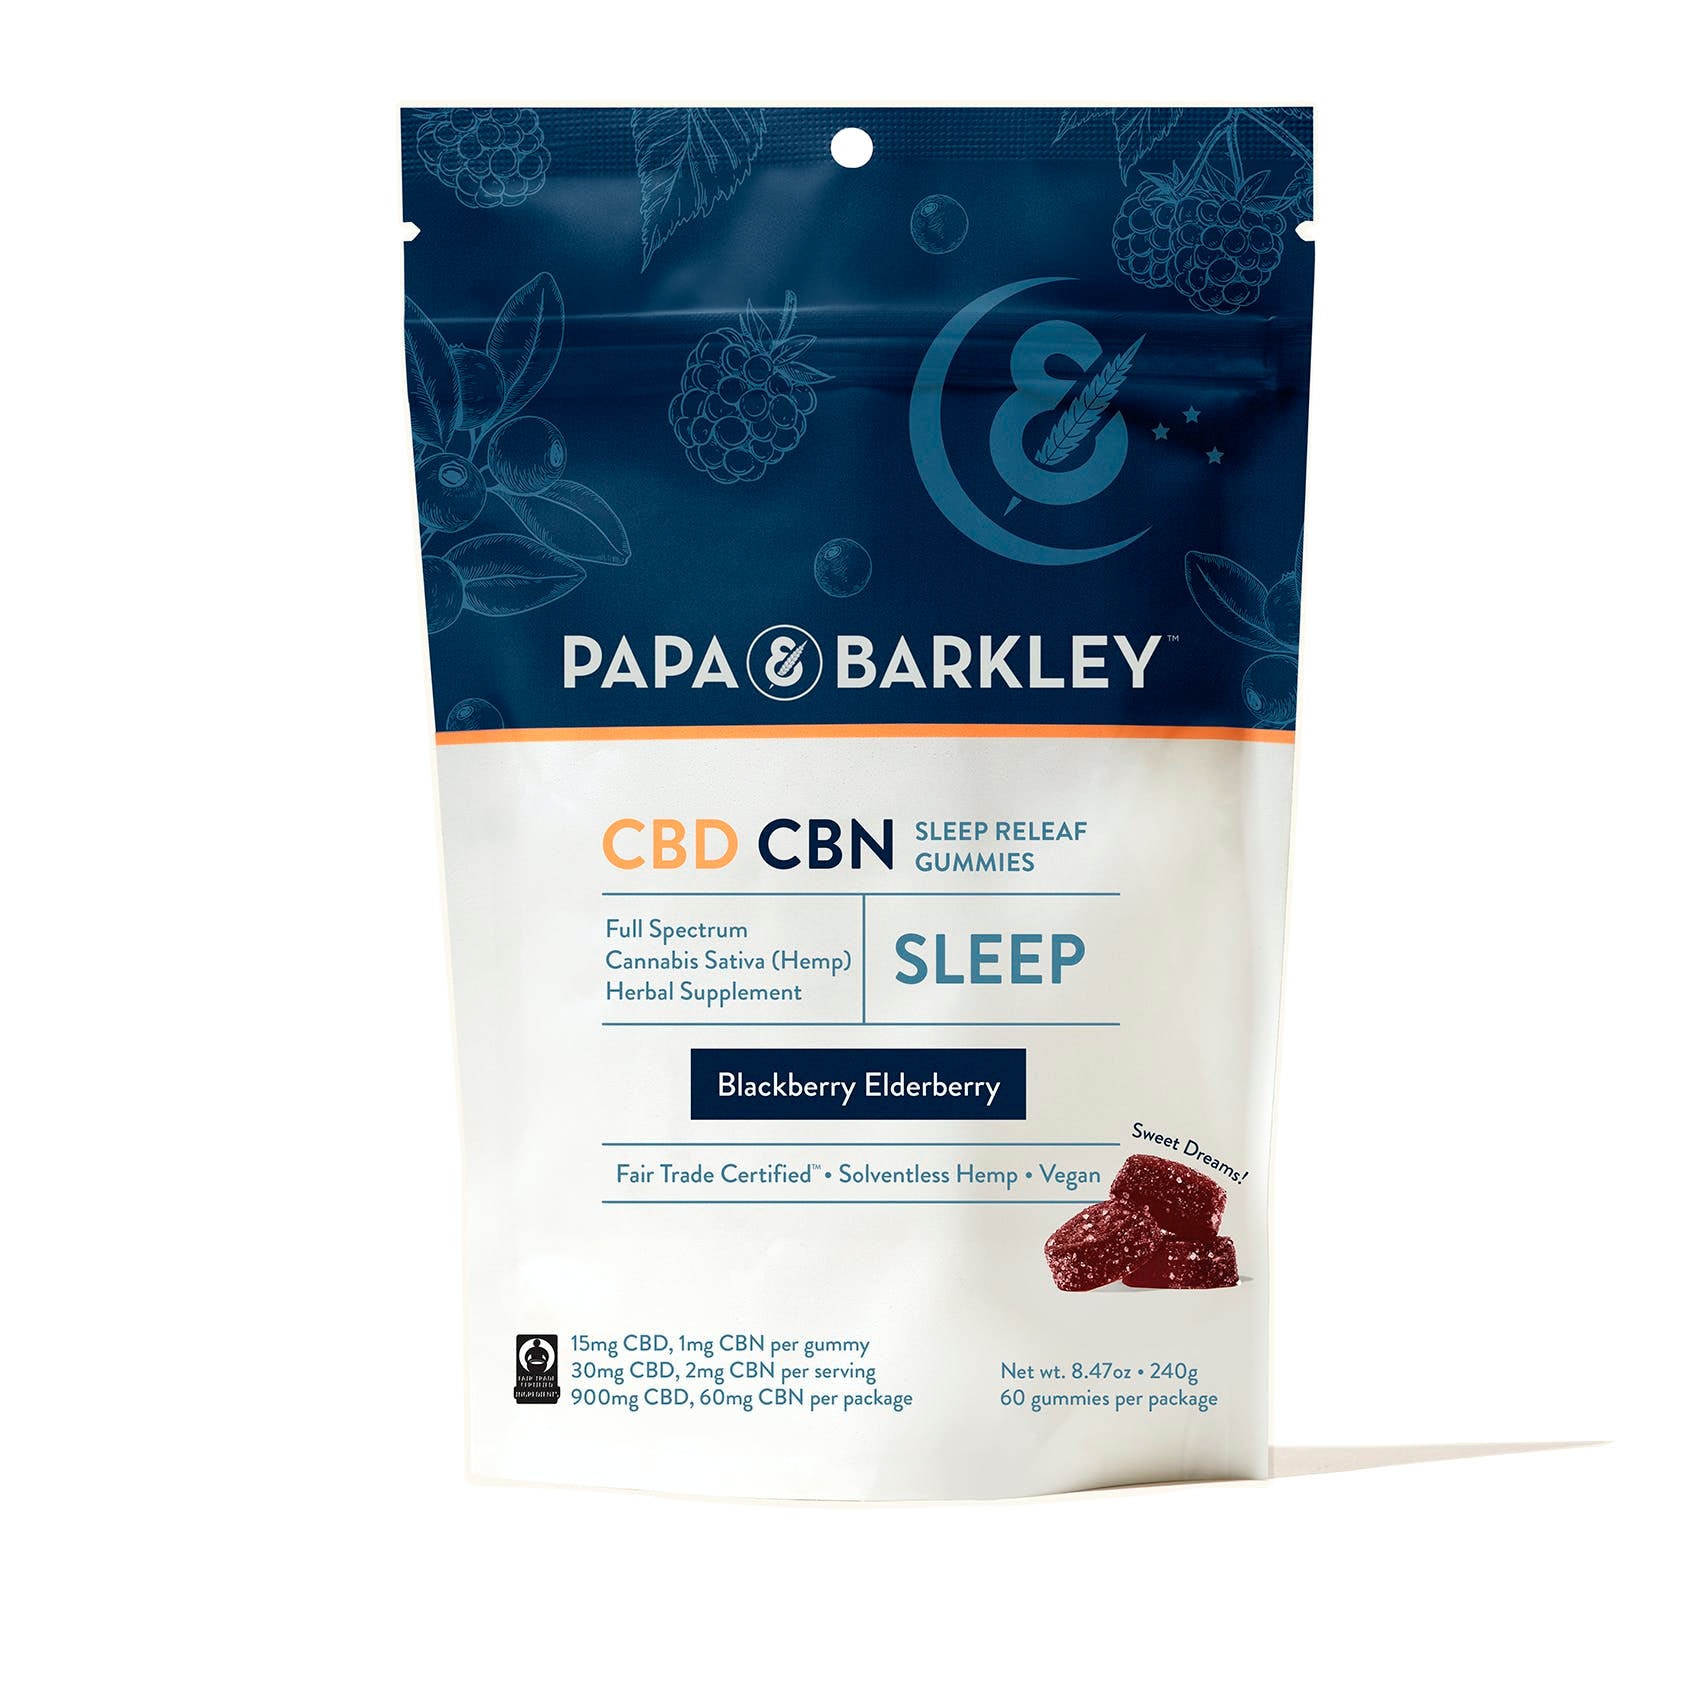 Papa & Barkley, CBD CBN Sleep Releaf Gummies, Blackberry Elderberry, Full Spectrum, 60ct, 60mg CBN + 900mg CBD